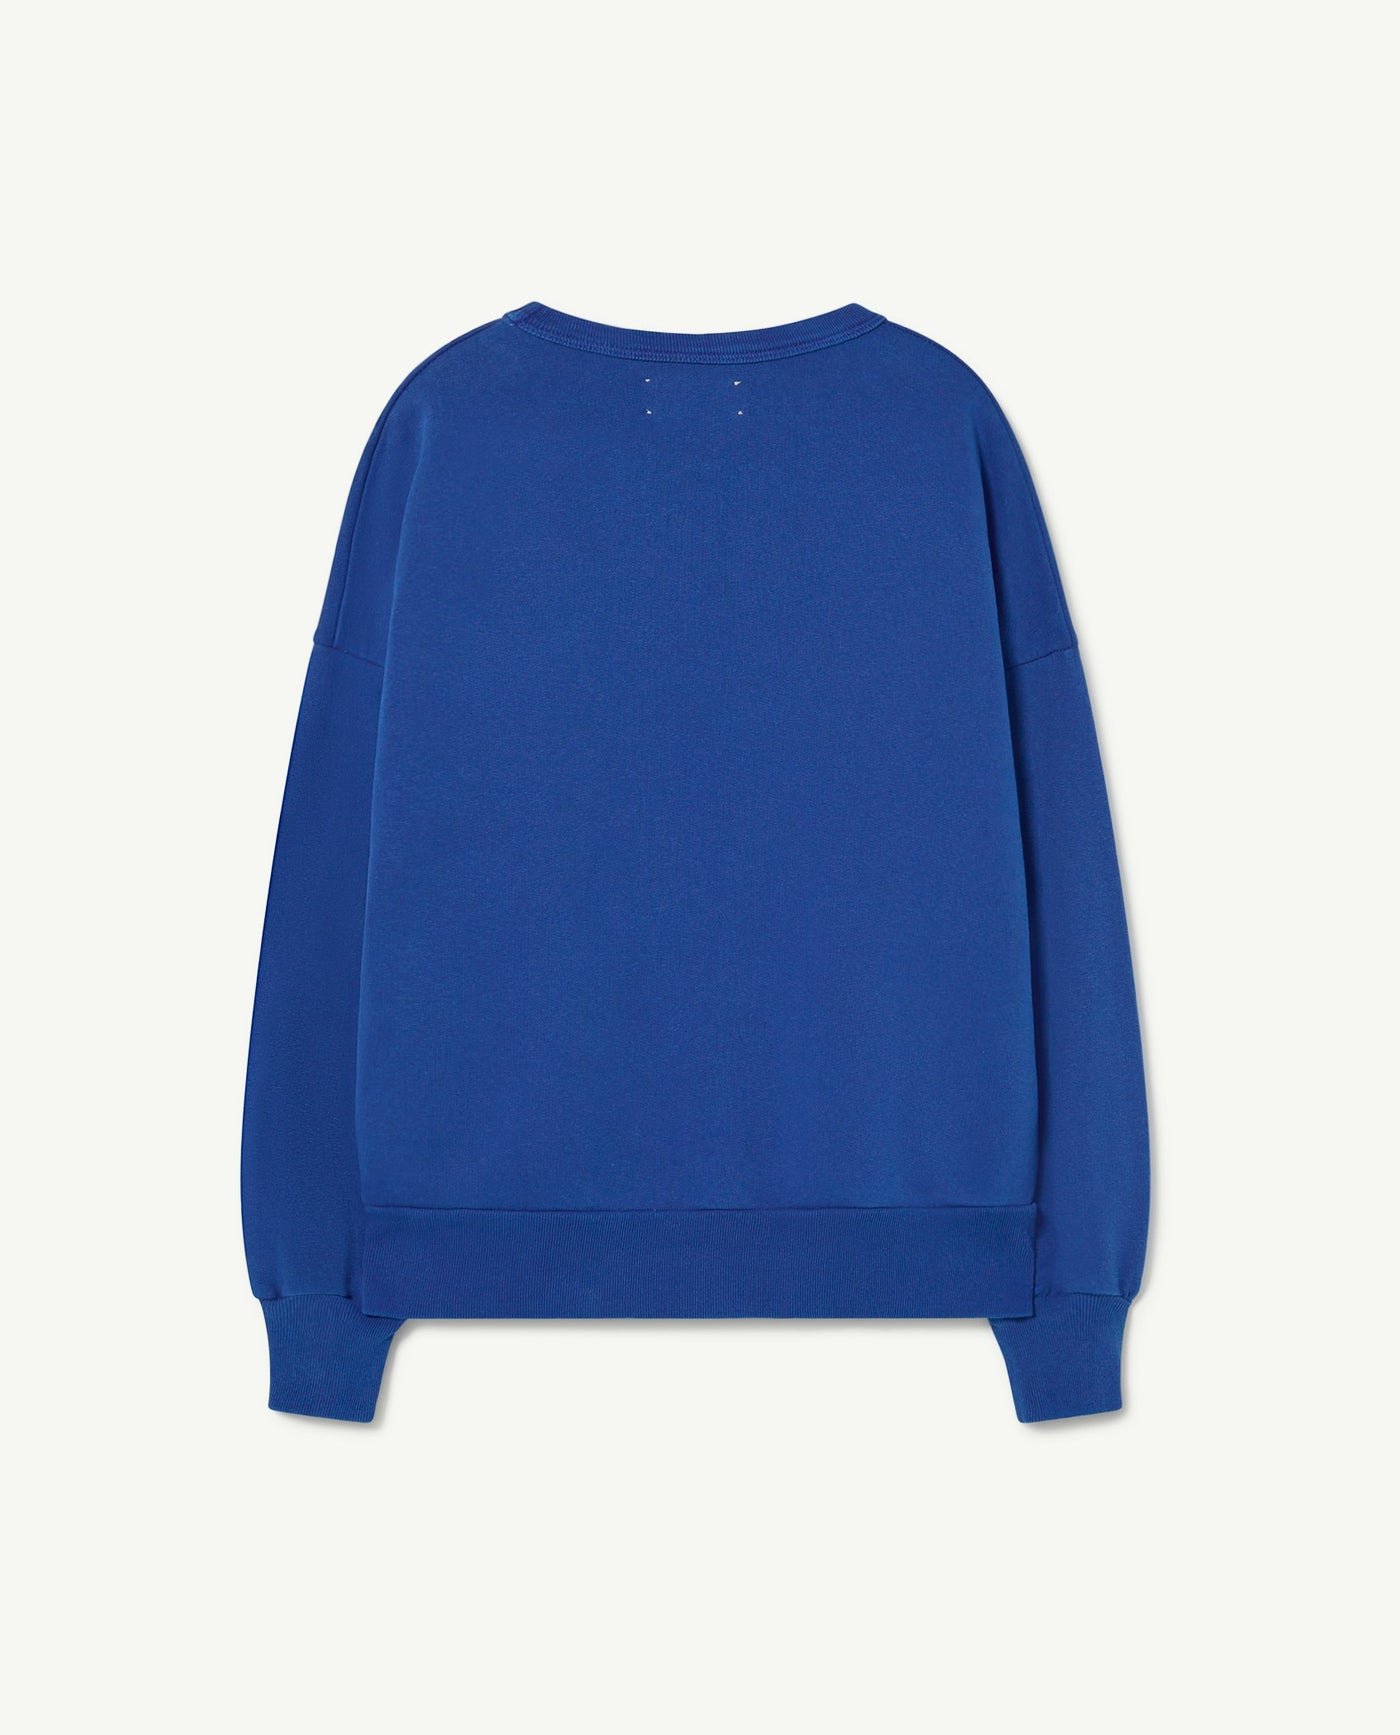 Horse Sweatshirt in Blue